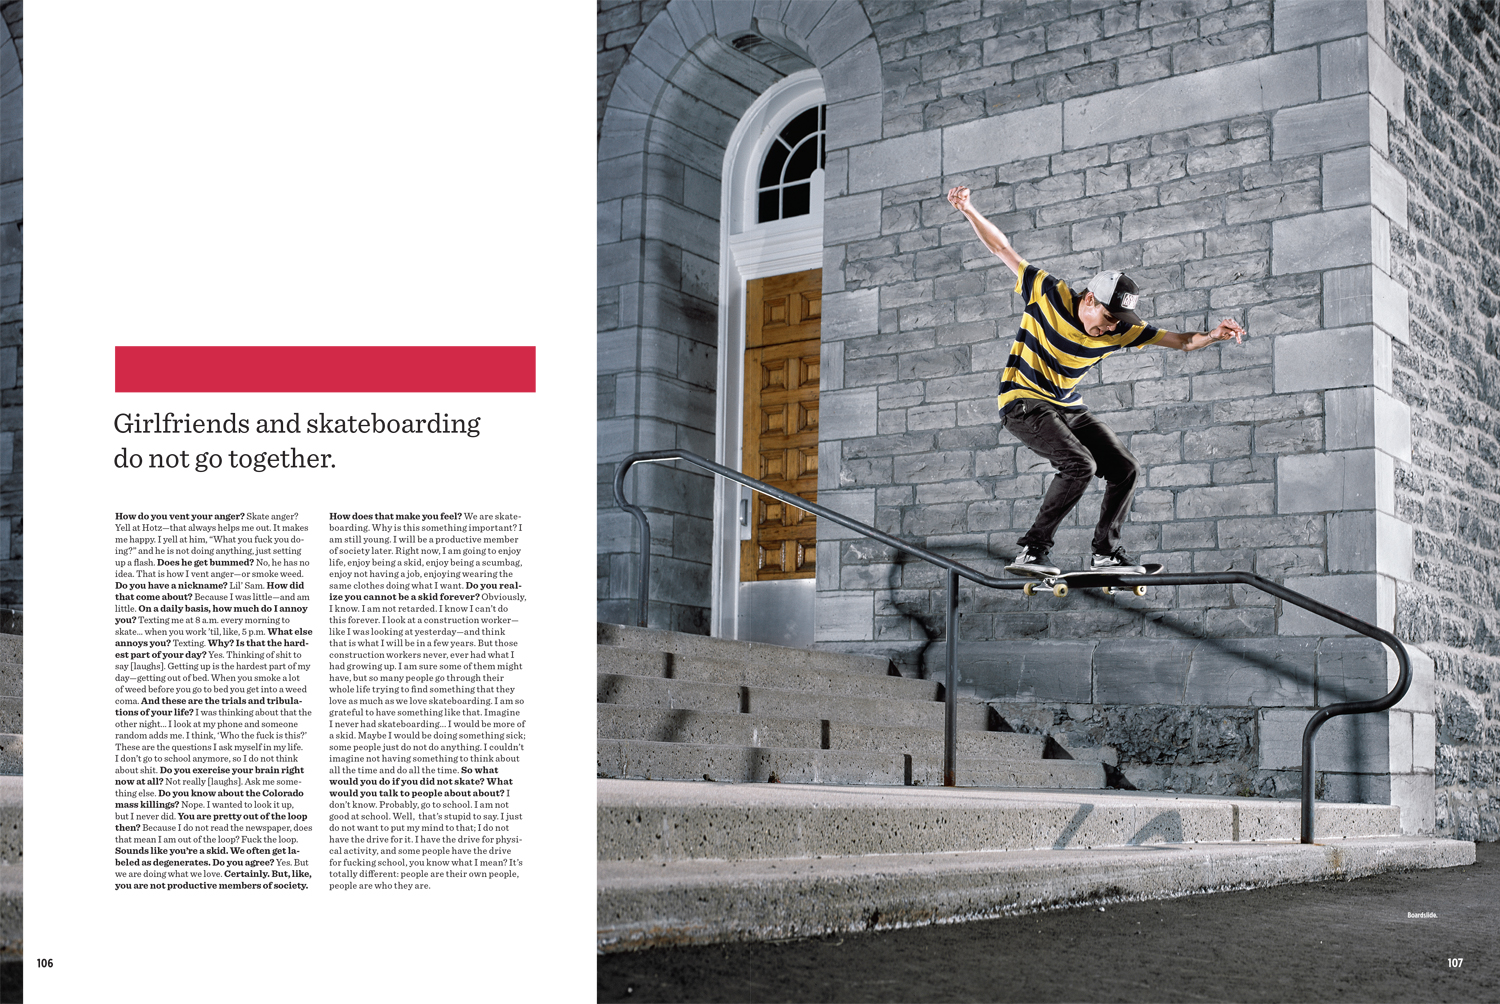 SBC Skateboard Canada Issue 14.4